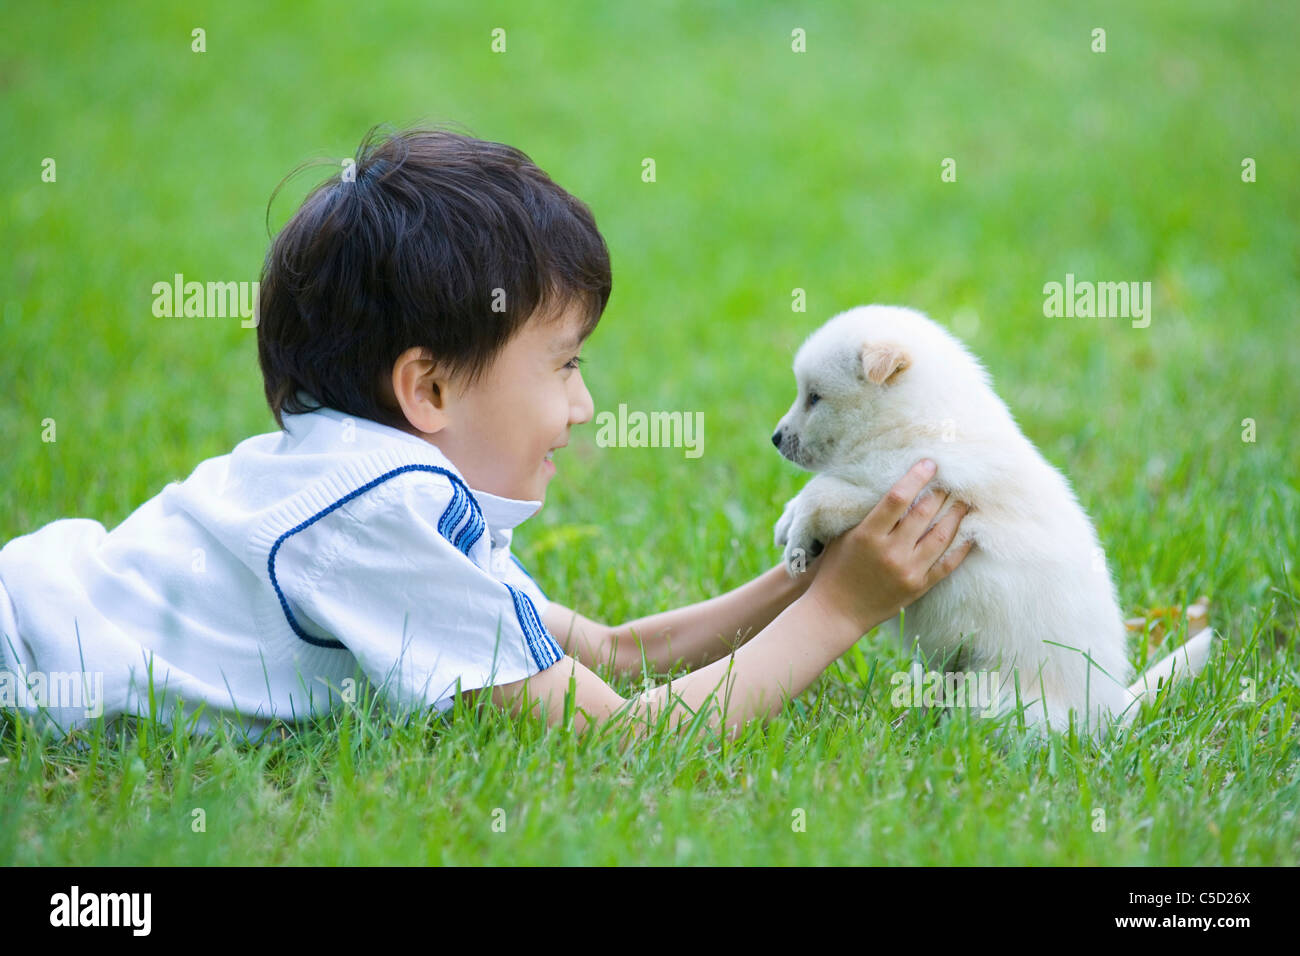 boy seeing baby dog Stock Photo